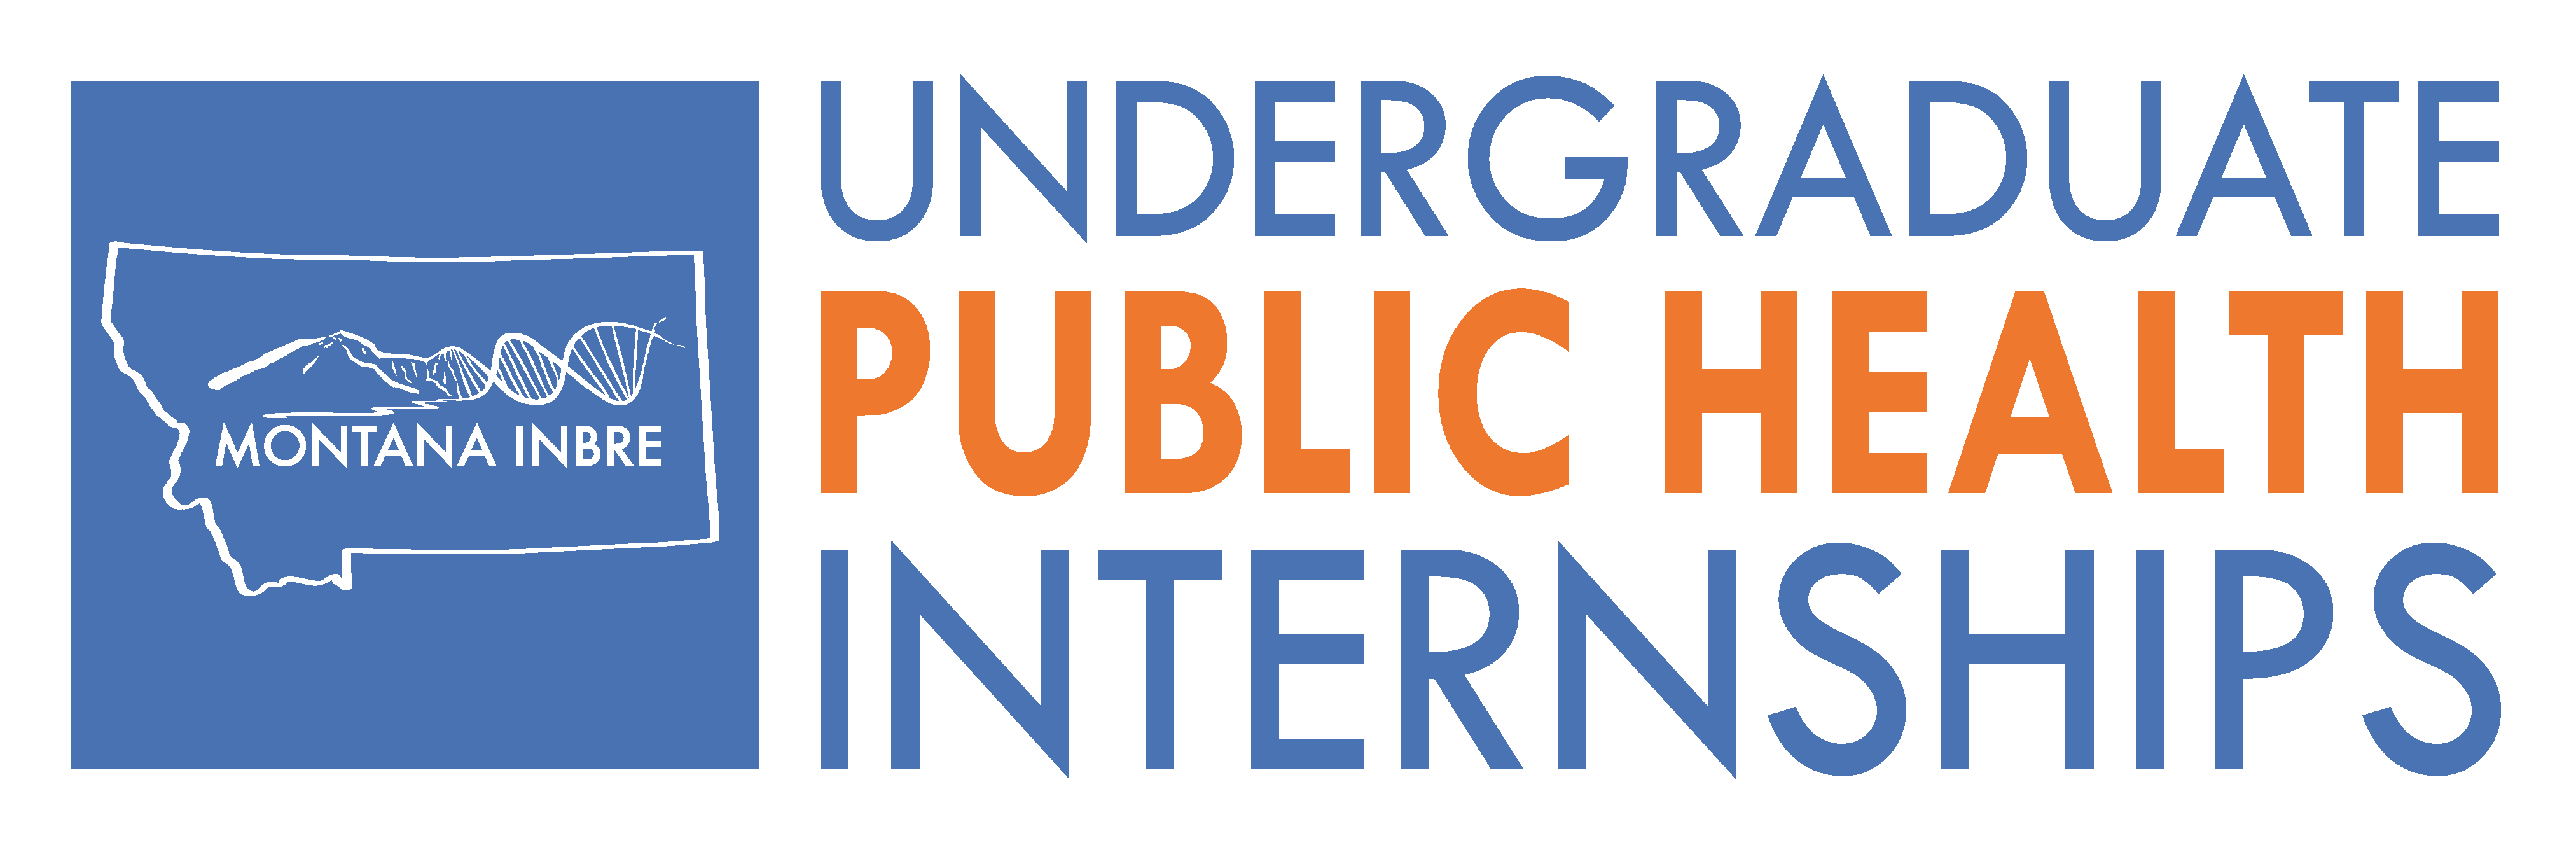 Public Health Internships for Undergraduates Montana INBRE Montana